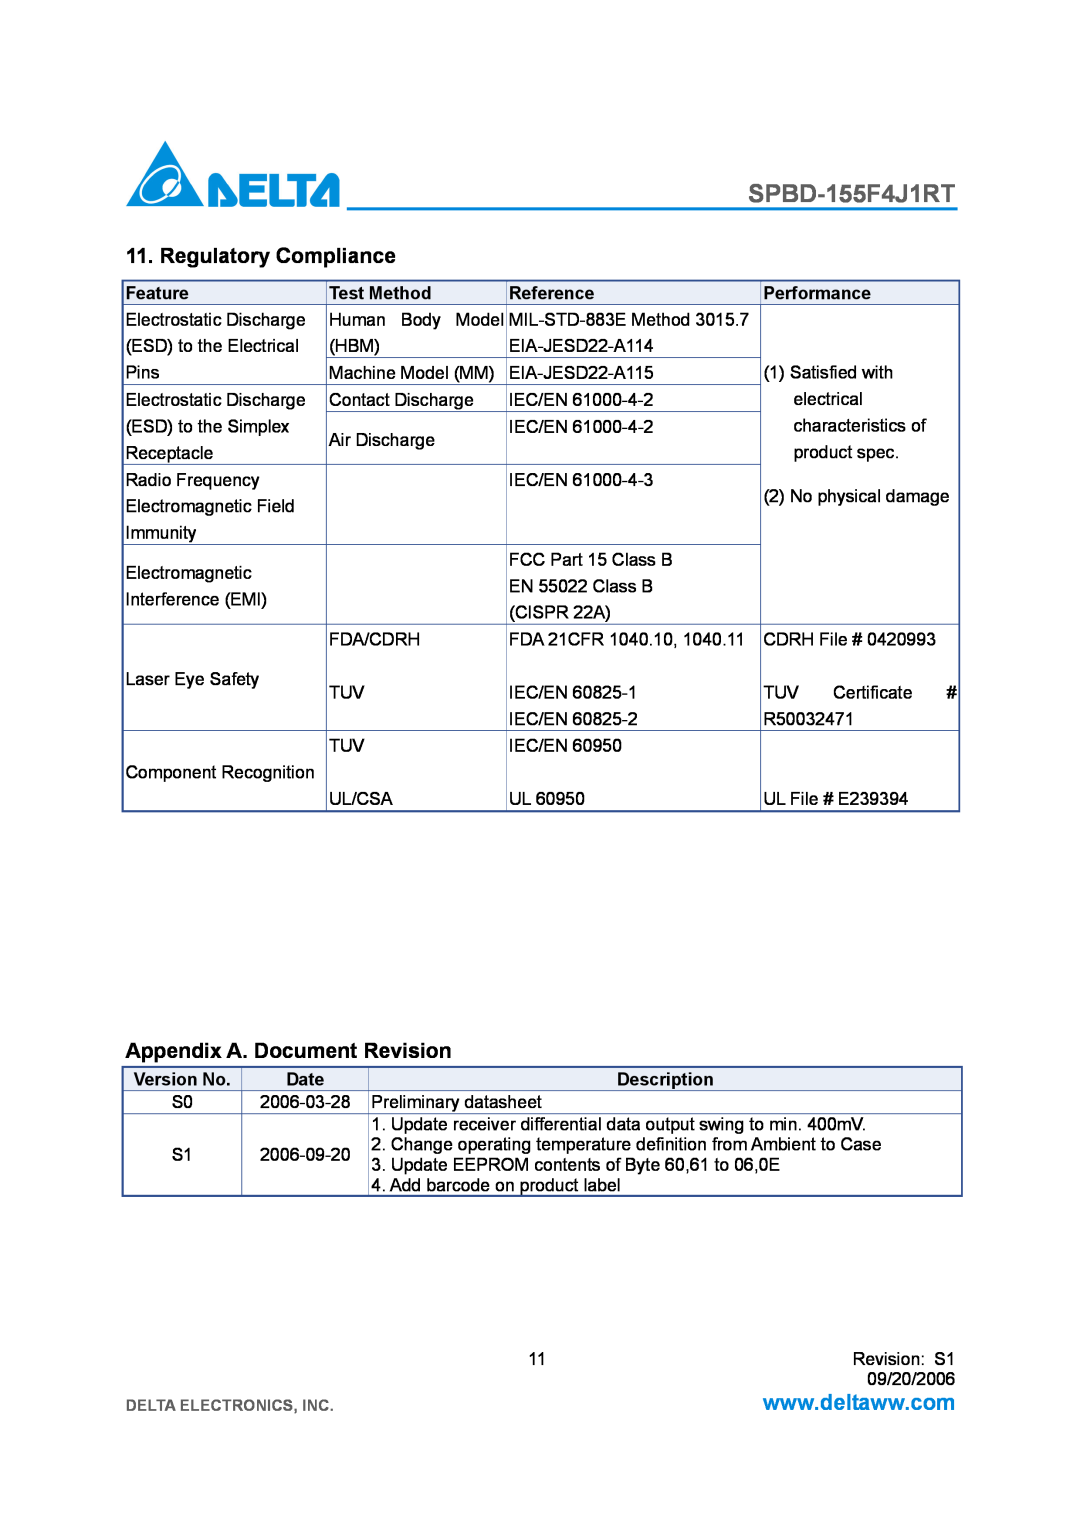 Delta Electronics SPBD-155F4J1RT Regulatory Compliance, Appendix A. Document Revision, Feature, Test Method, Reference 